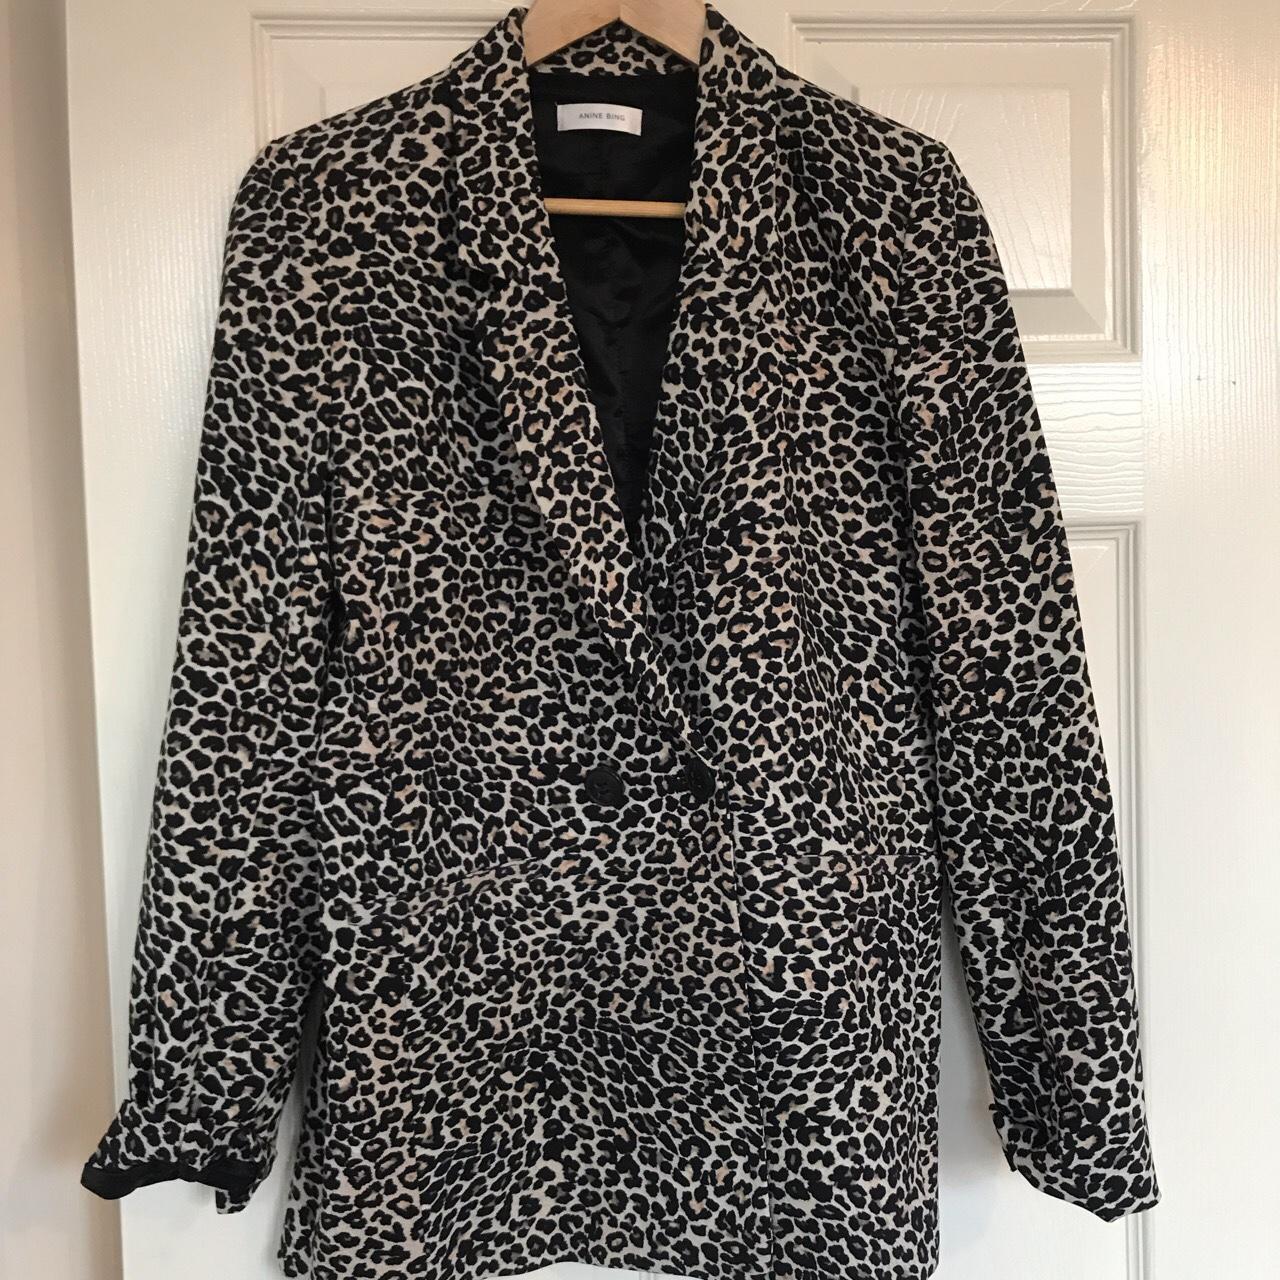 Anine bing leopard print blazer jacket size... - Depop